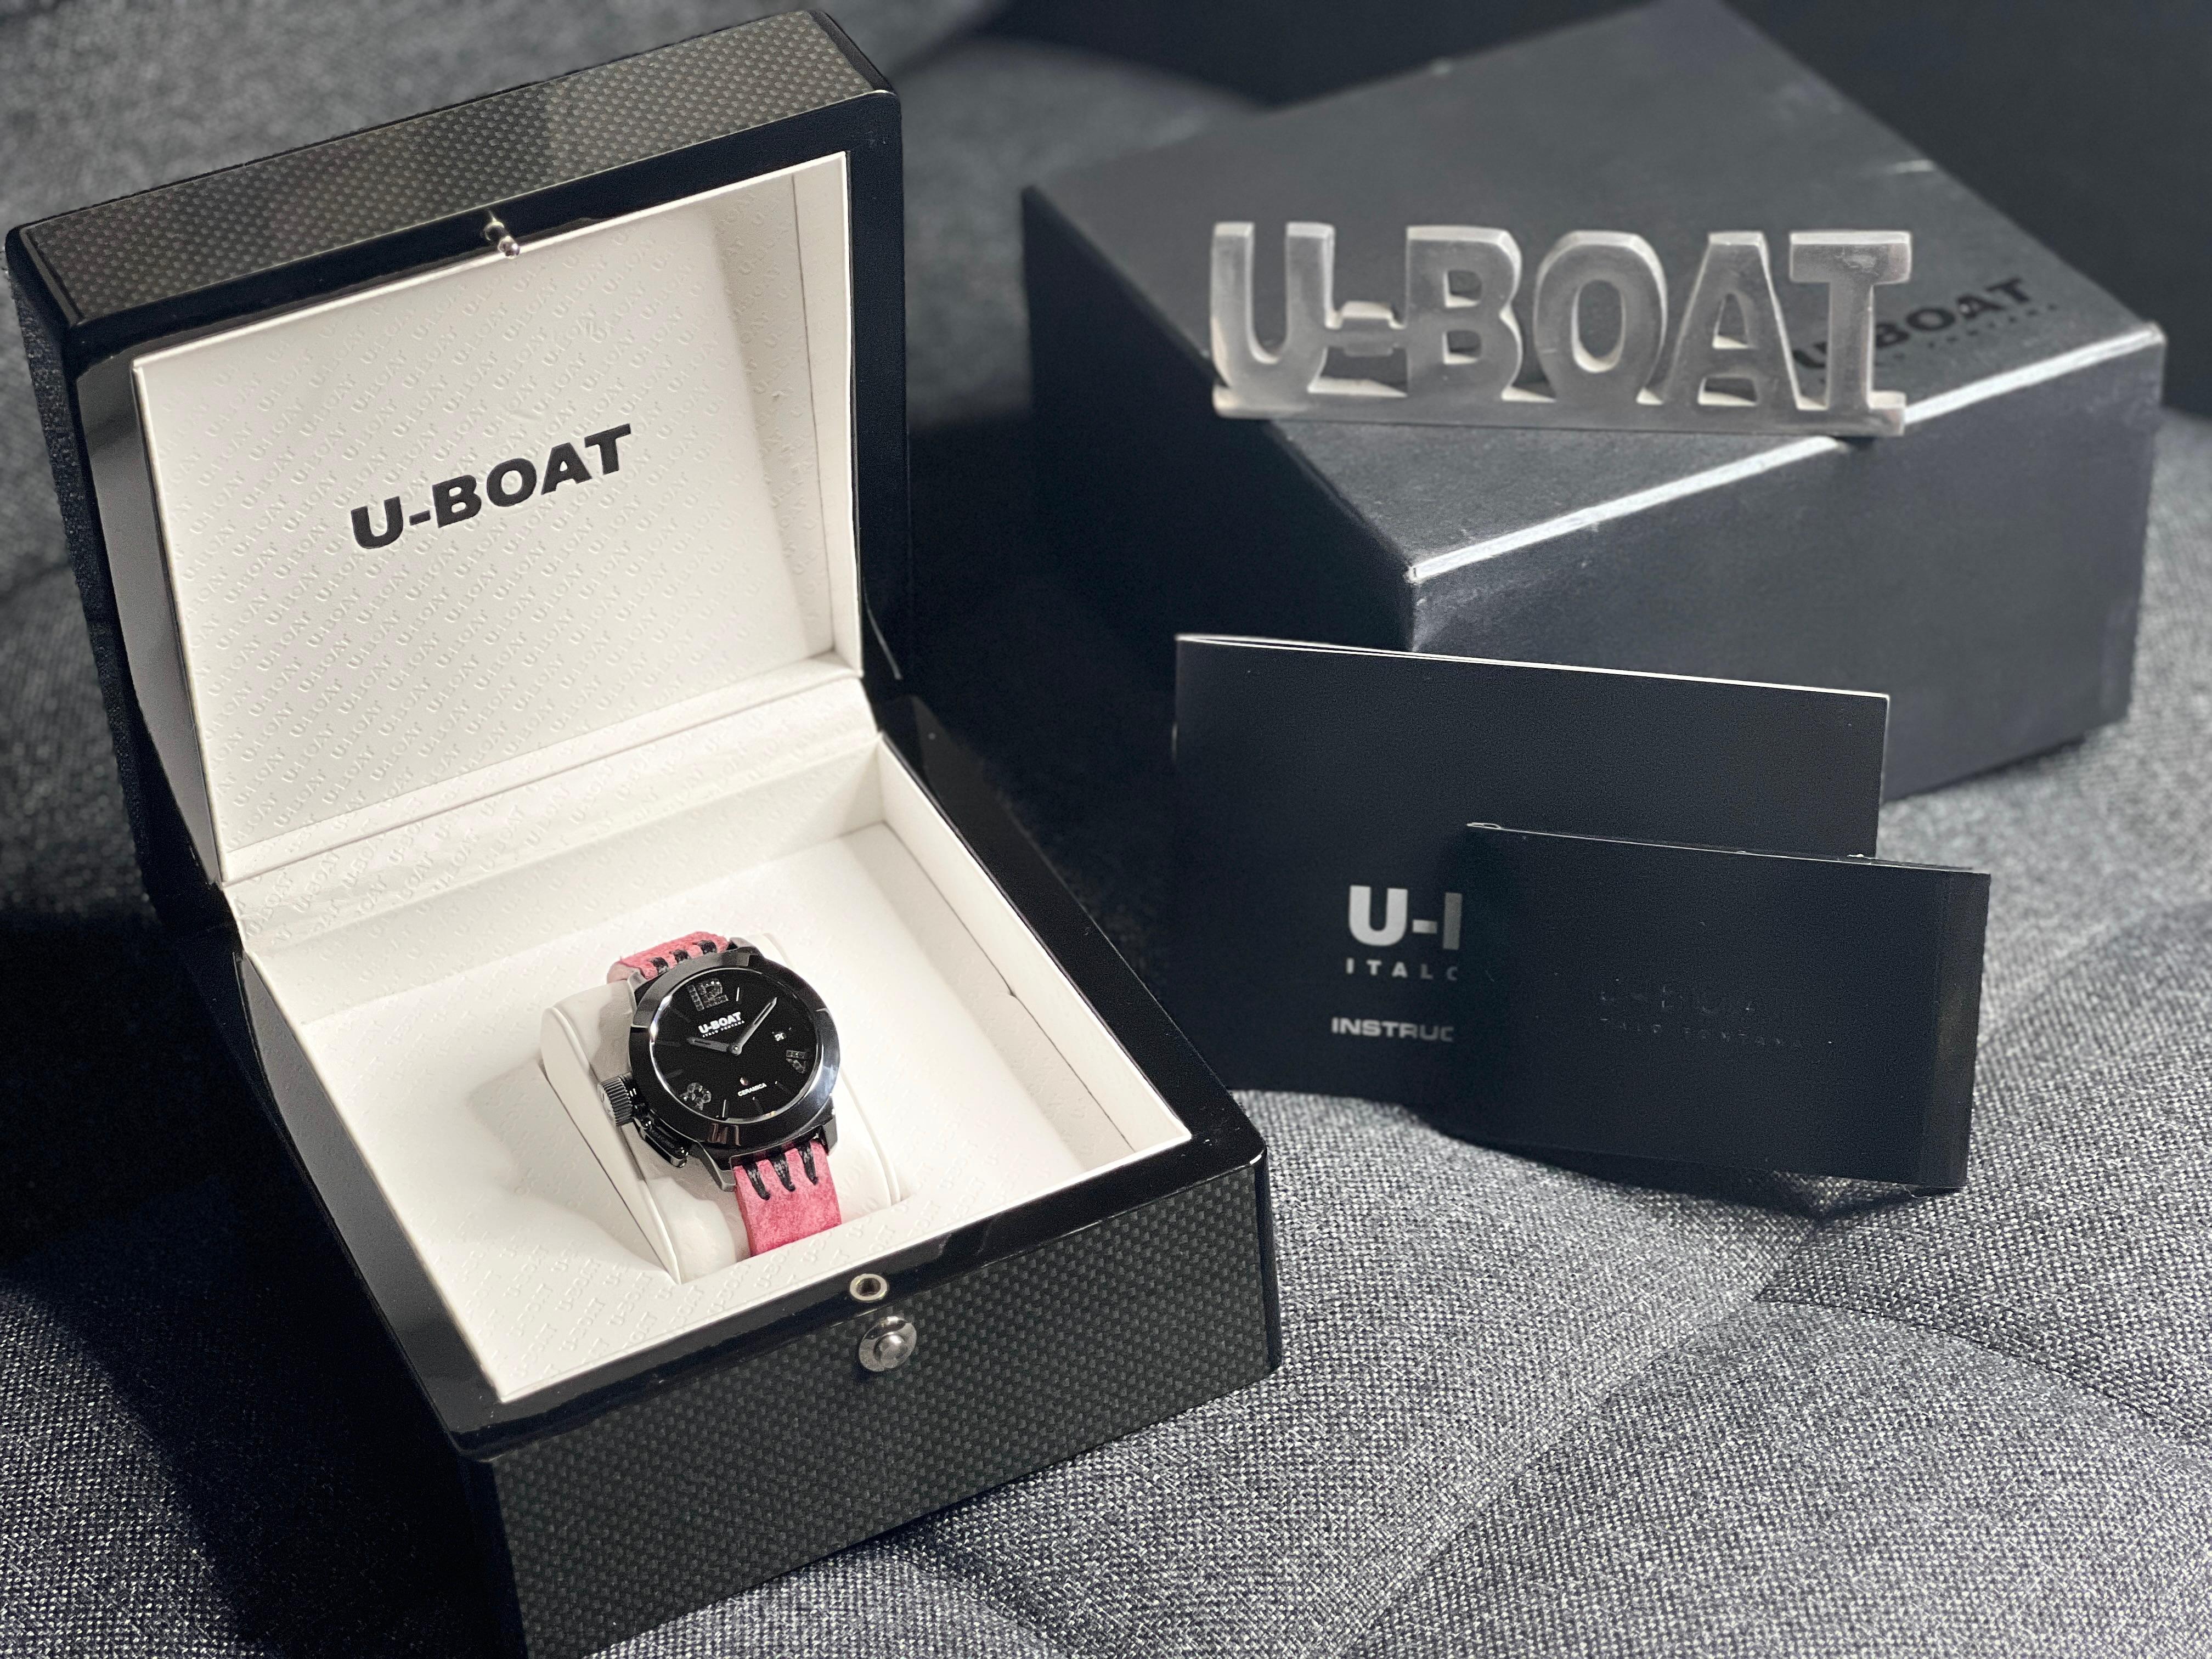 U-Boat Ceramic 42 mm Automatic Wristwatch For Sale 1